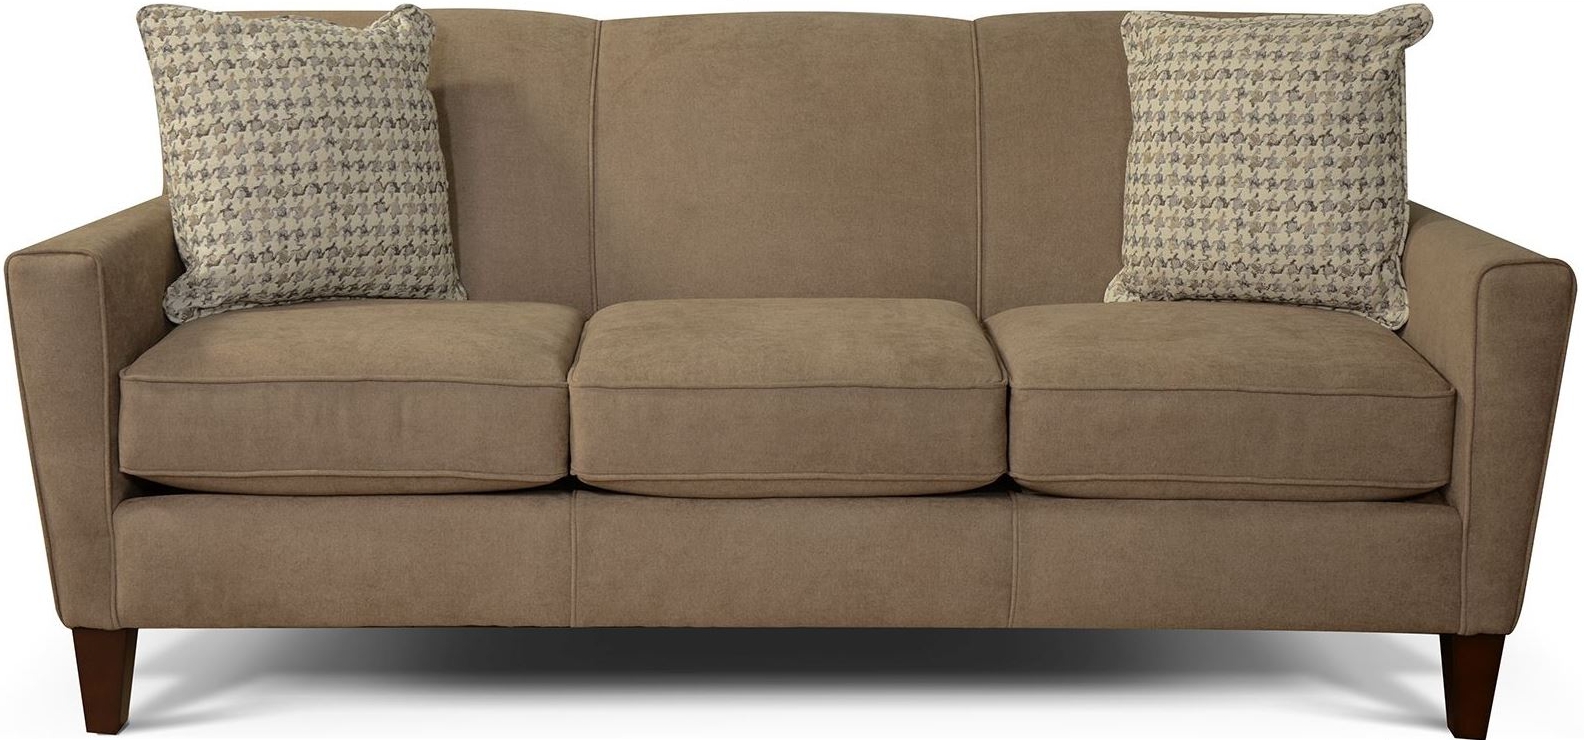 England Furniturellegedale Sofa